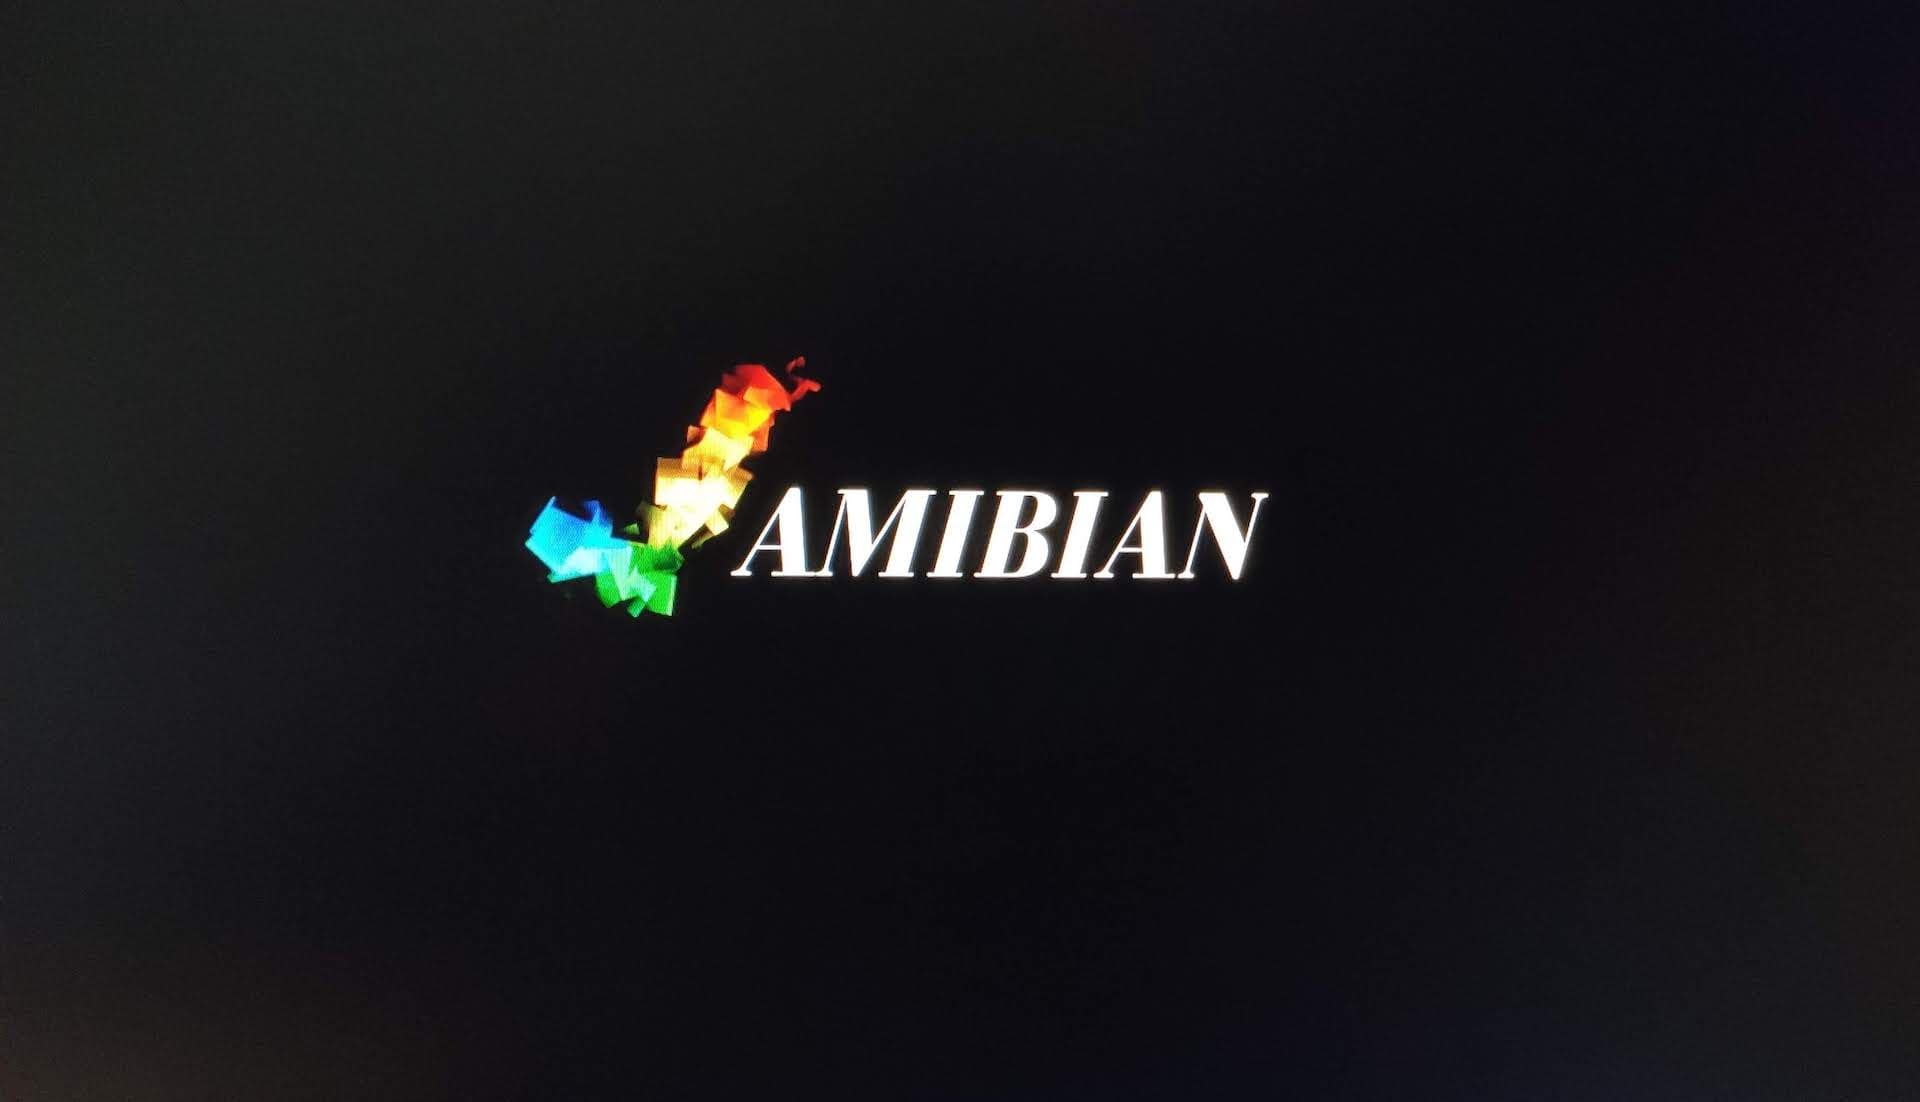 Amibian - Splash screen